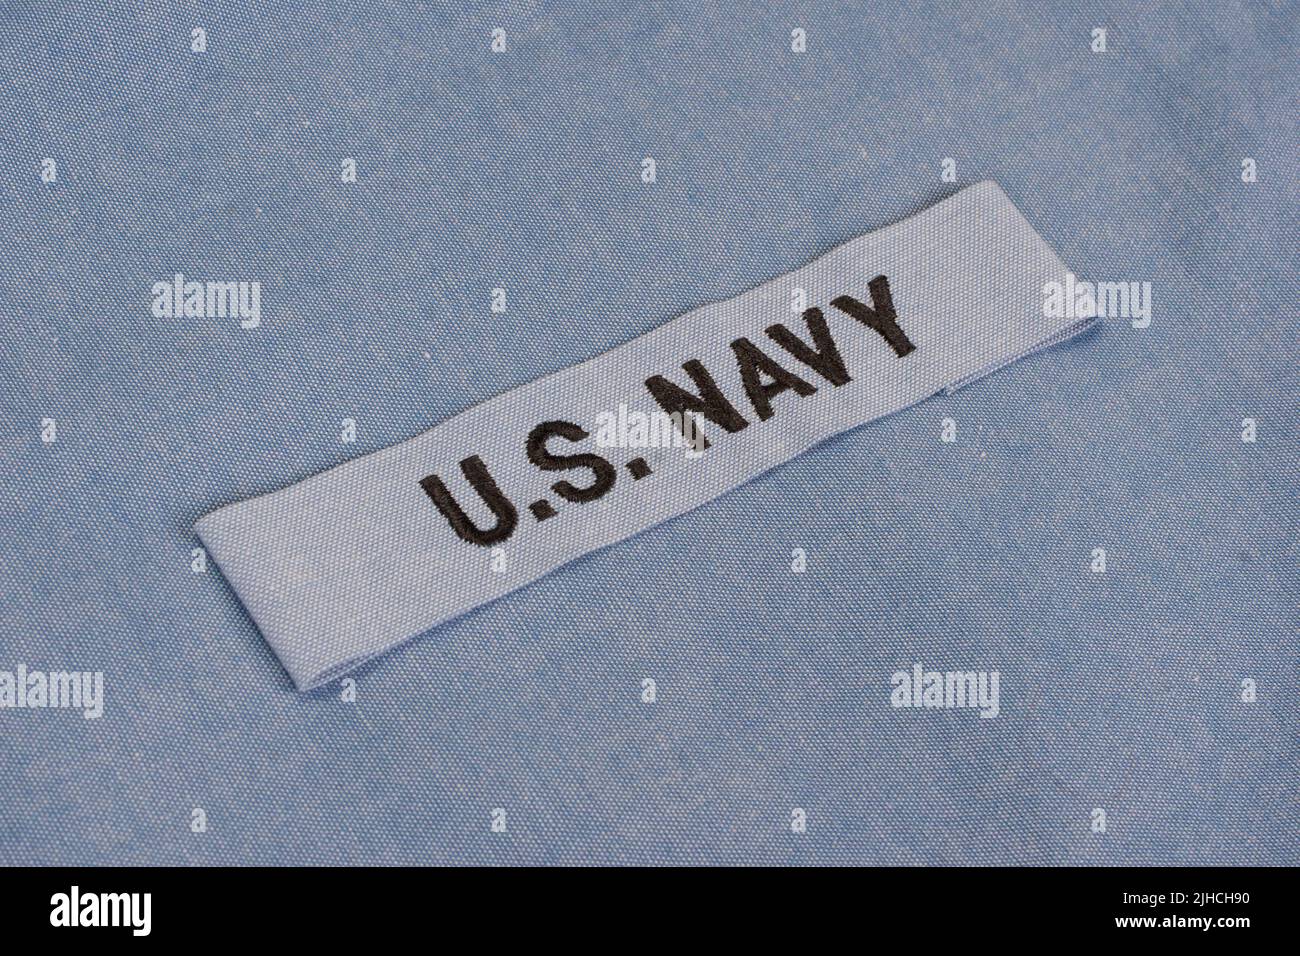 US NAVY branch tape on navy blue uniform background Stock Photo